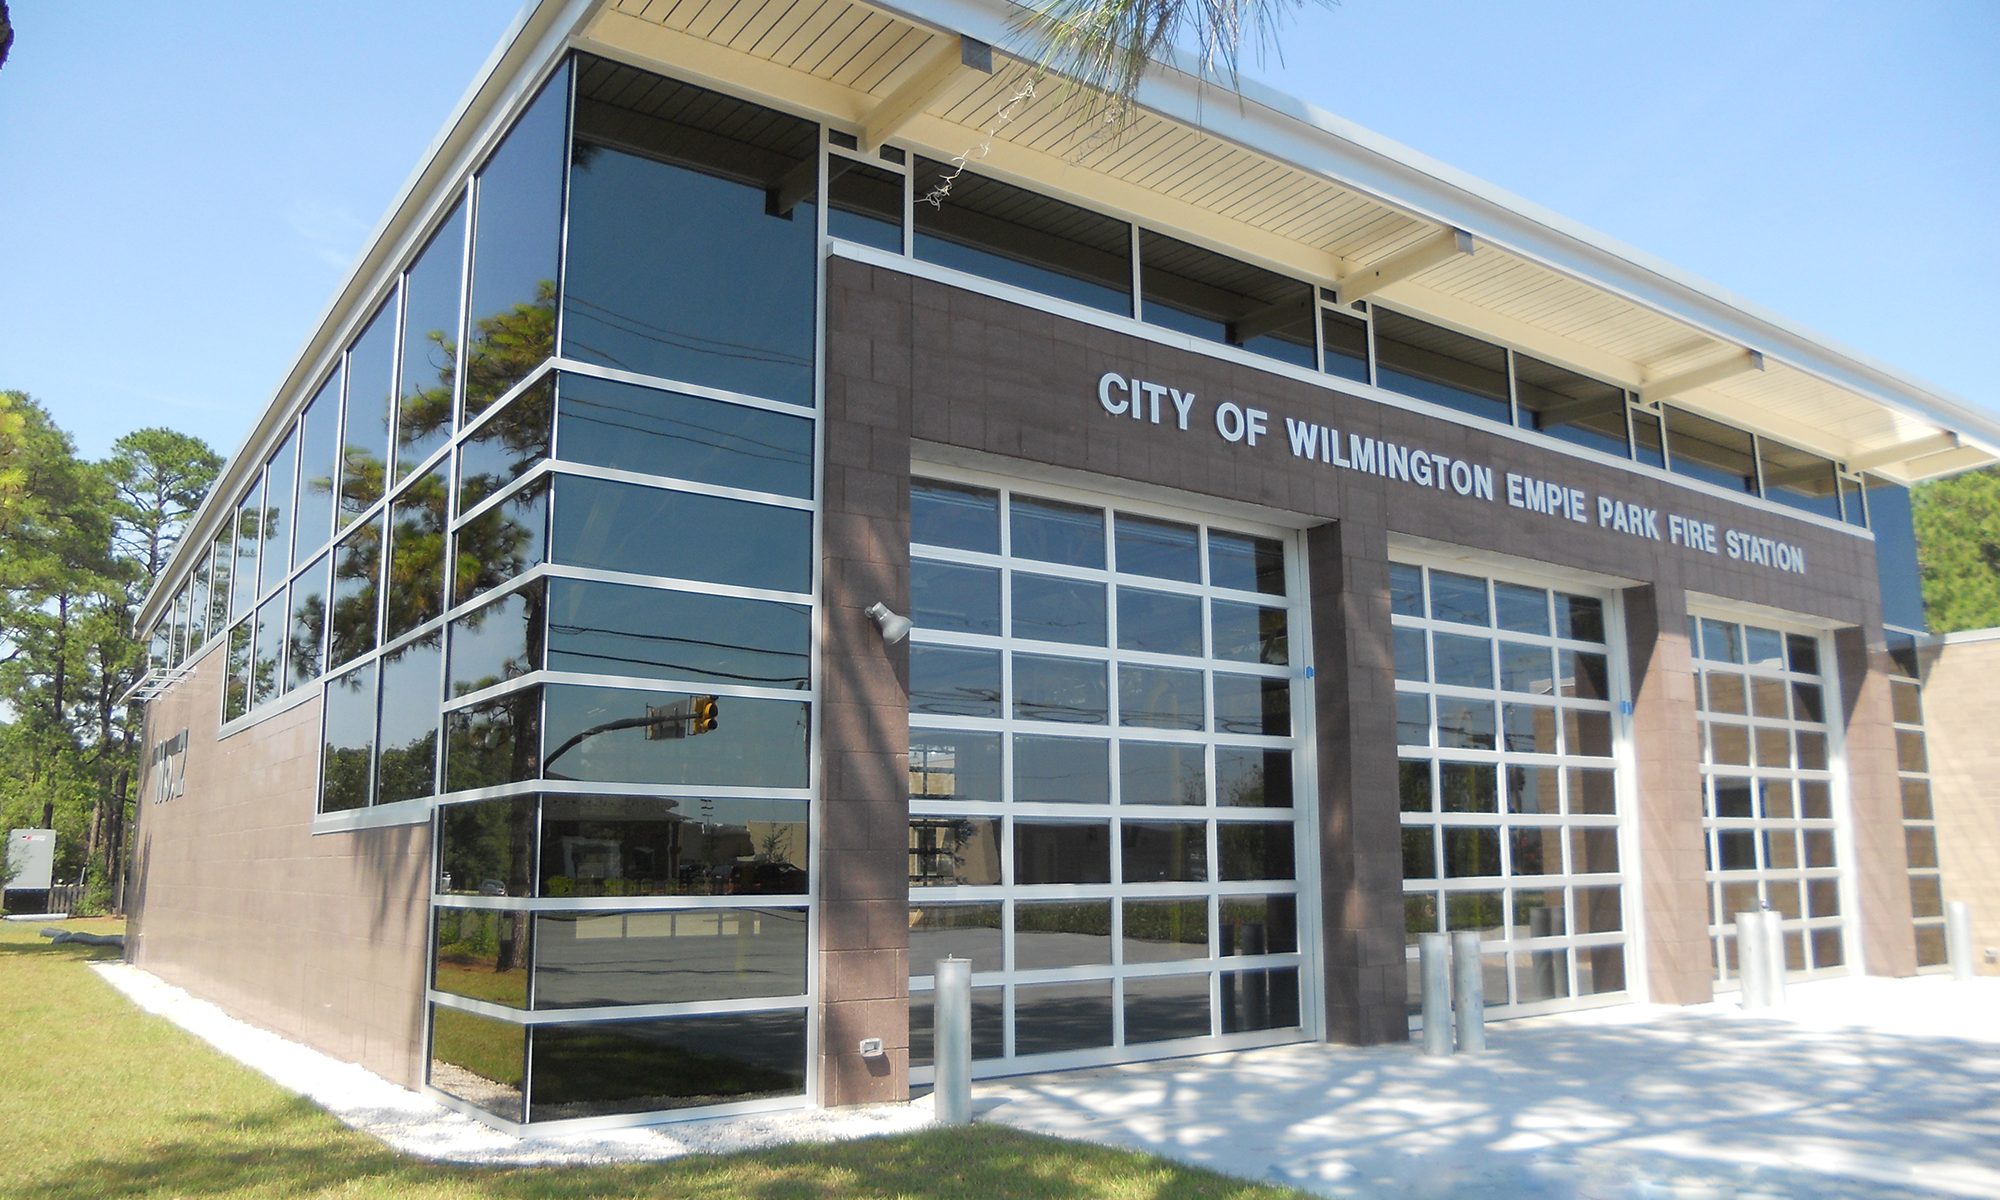 Exterior of City of Wilmington Empie Park Fire Station No. 2